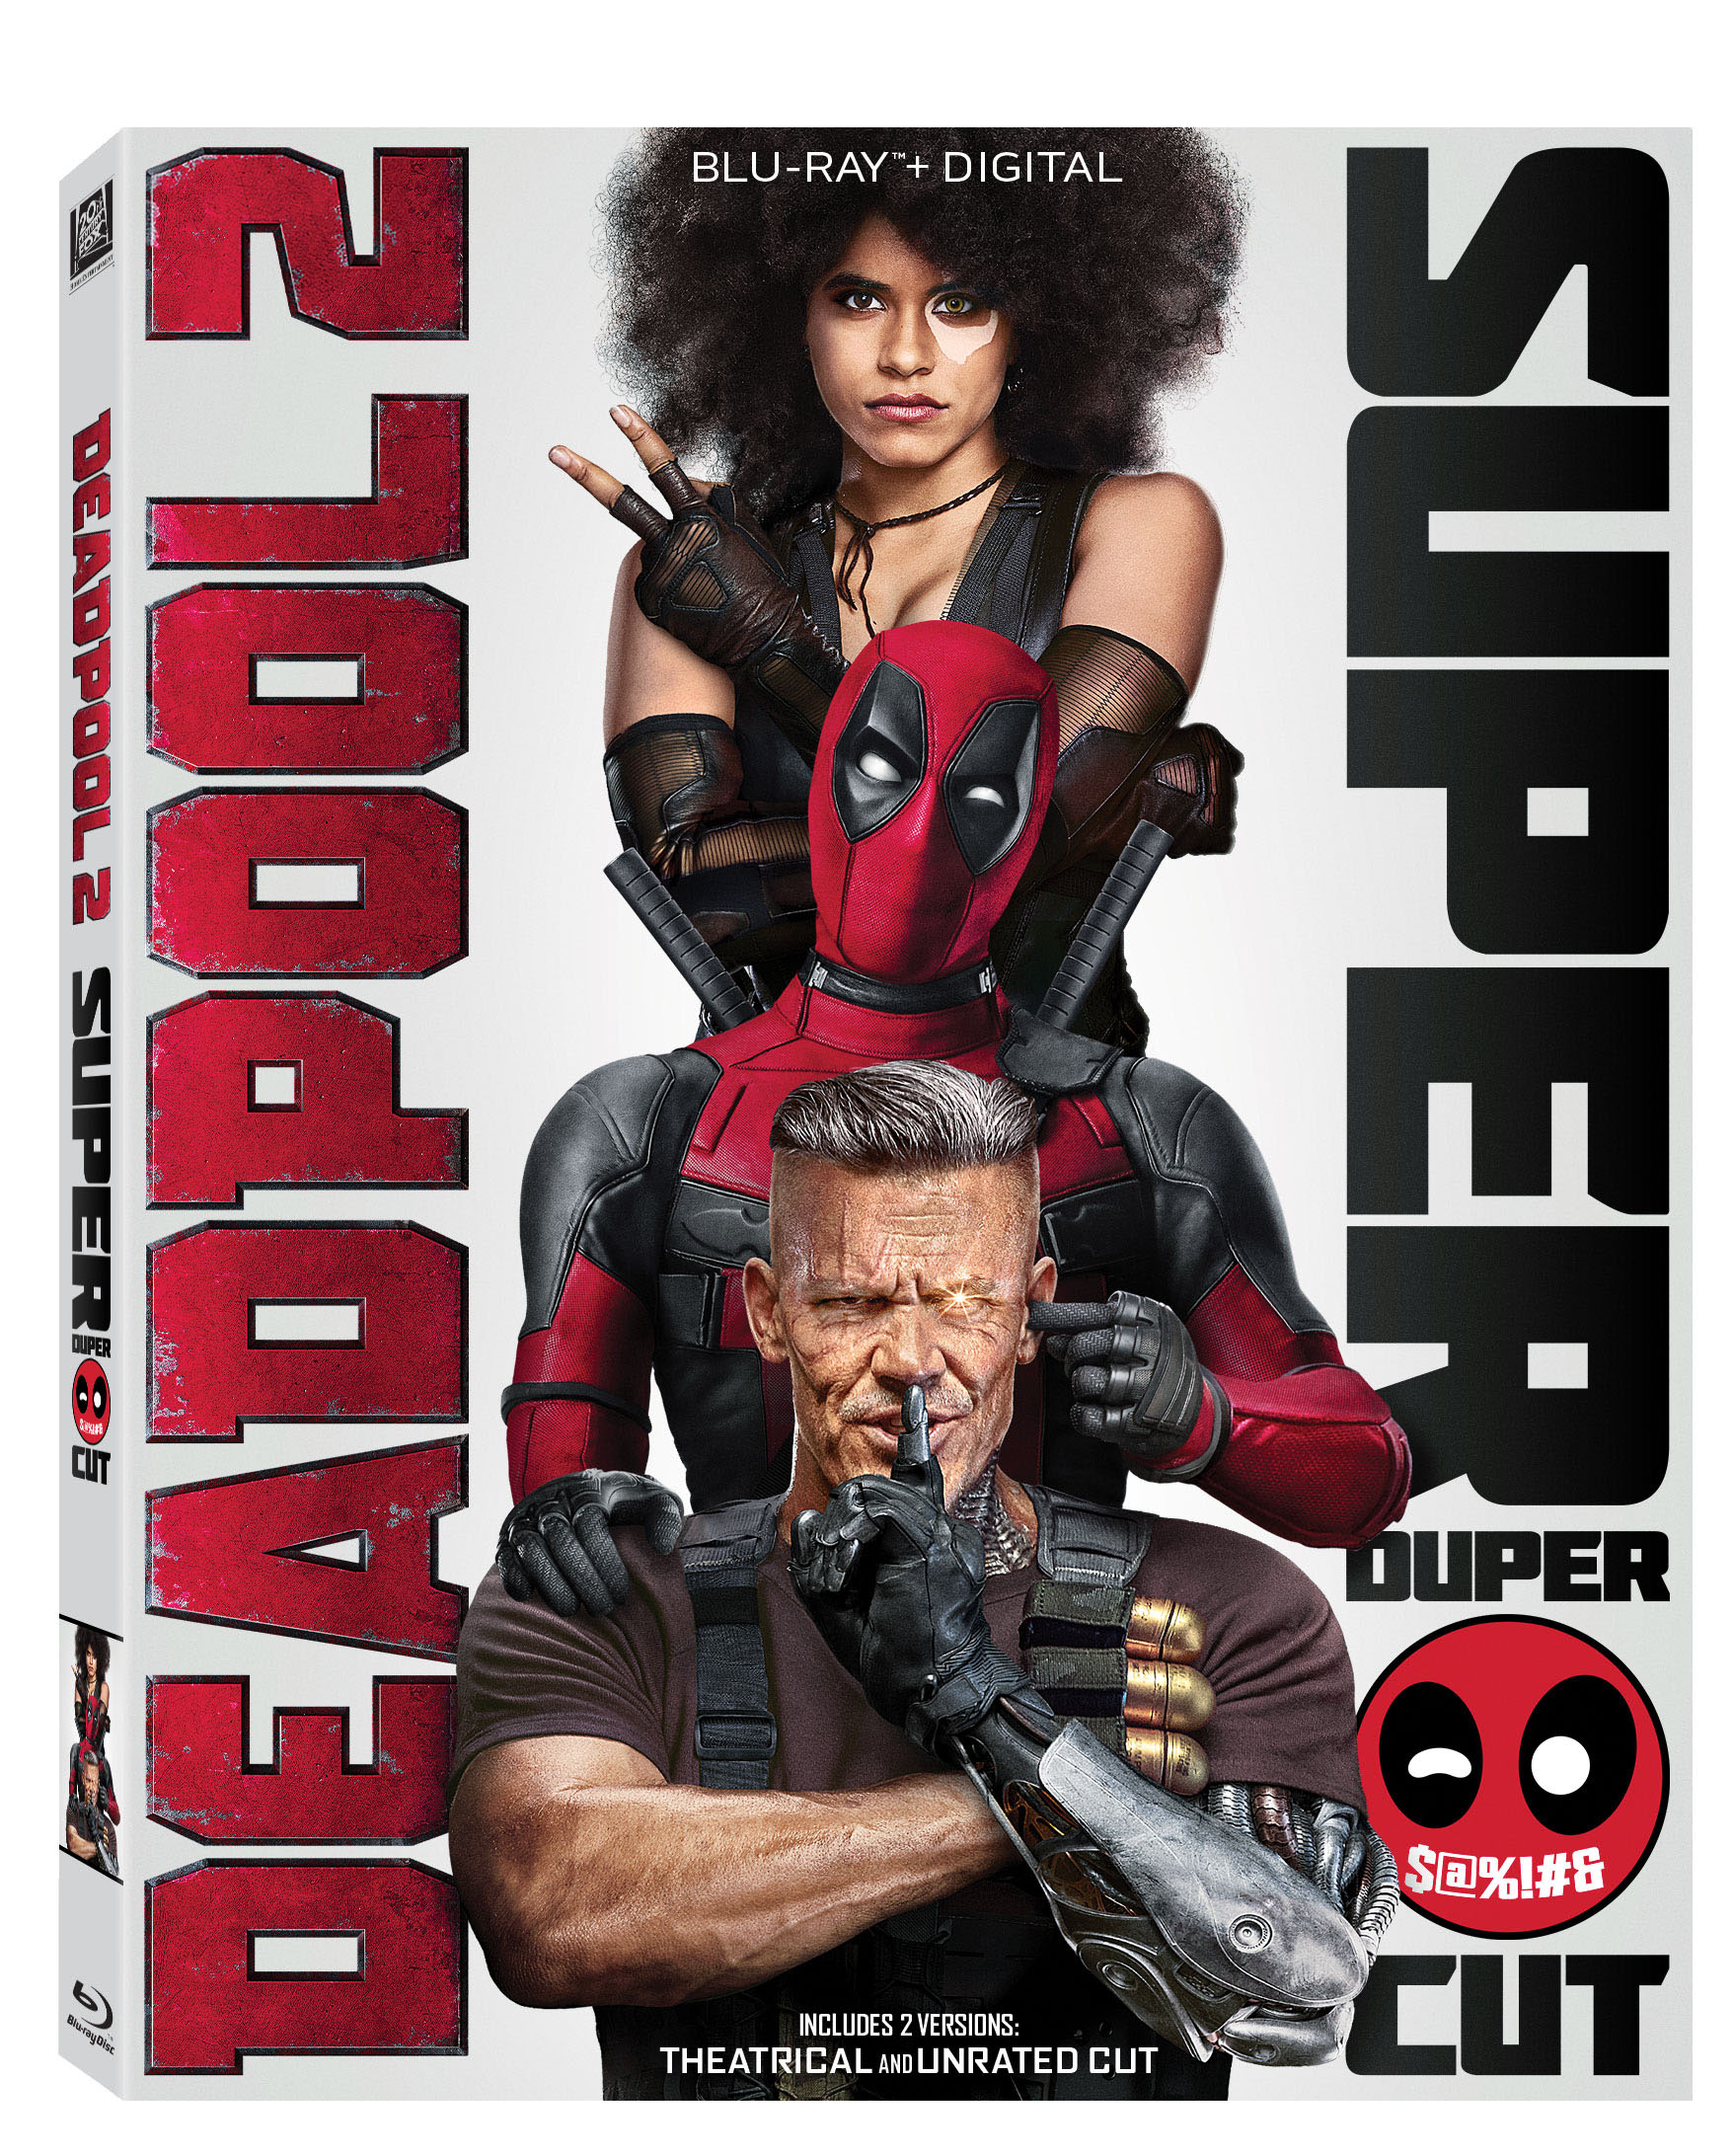 Deadpool 2 Hindi Dubbed Download